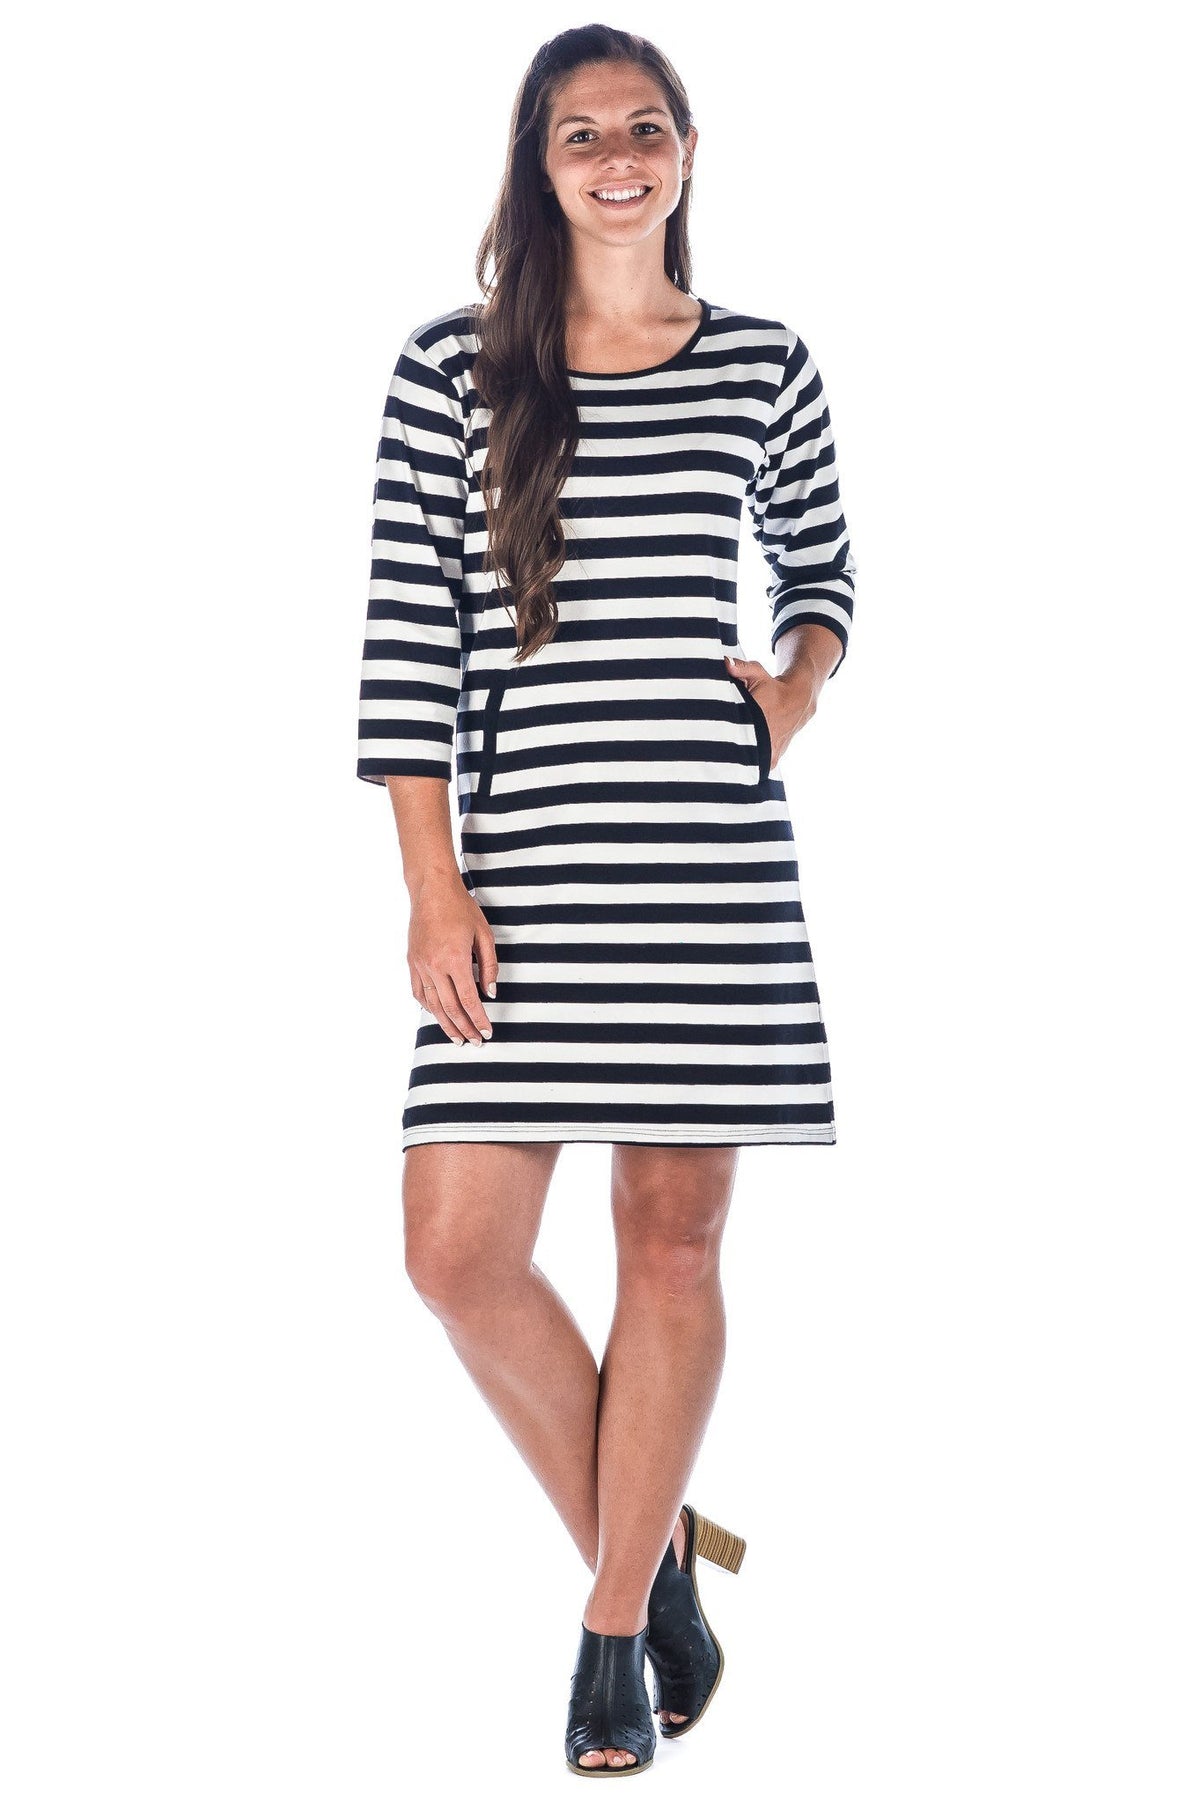 Women's Premium Cotton Knit Dress - Stripe  - Black/White